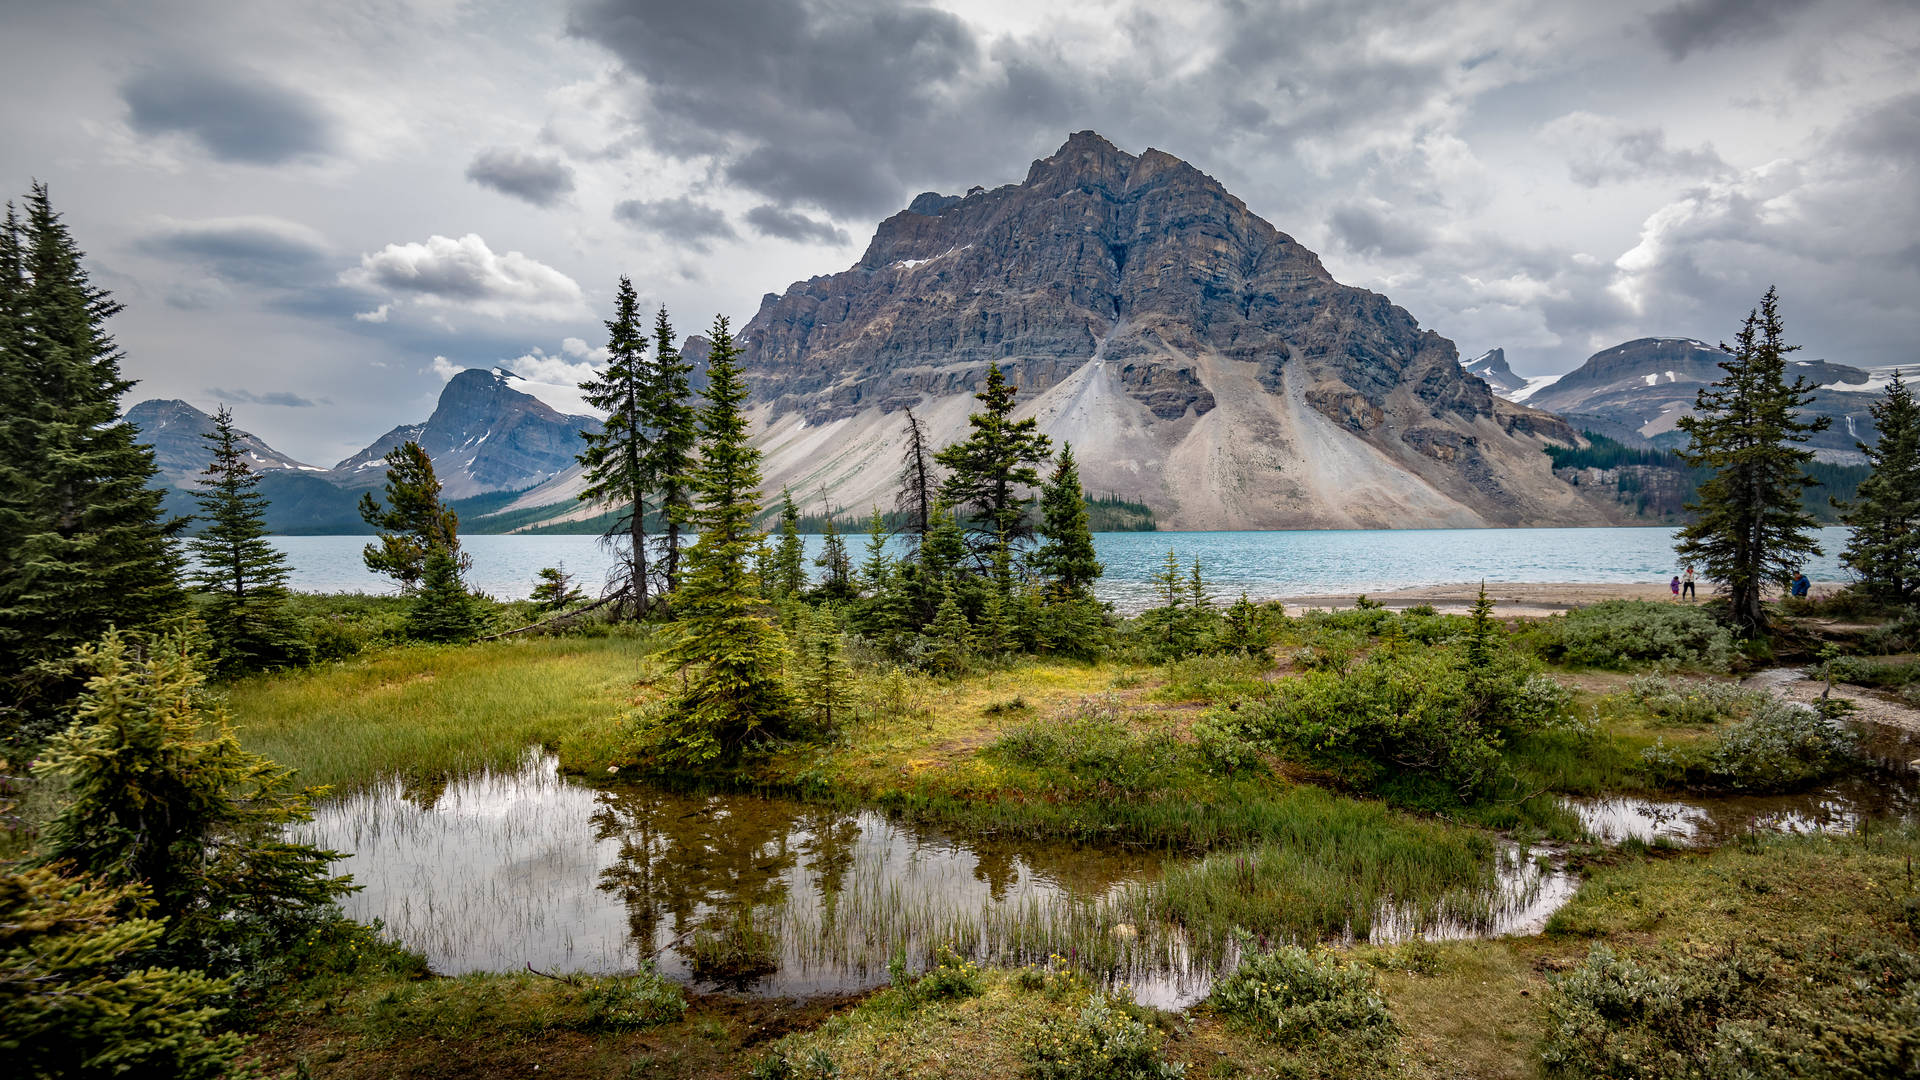 Nature's Splendor - A Majestic Mountain Peak Wallpaper